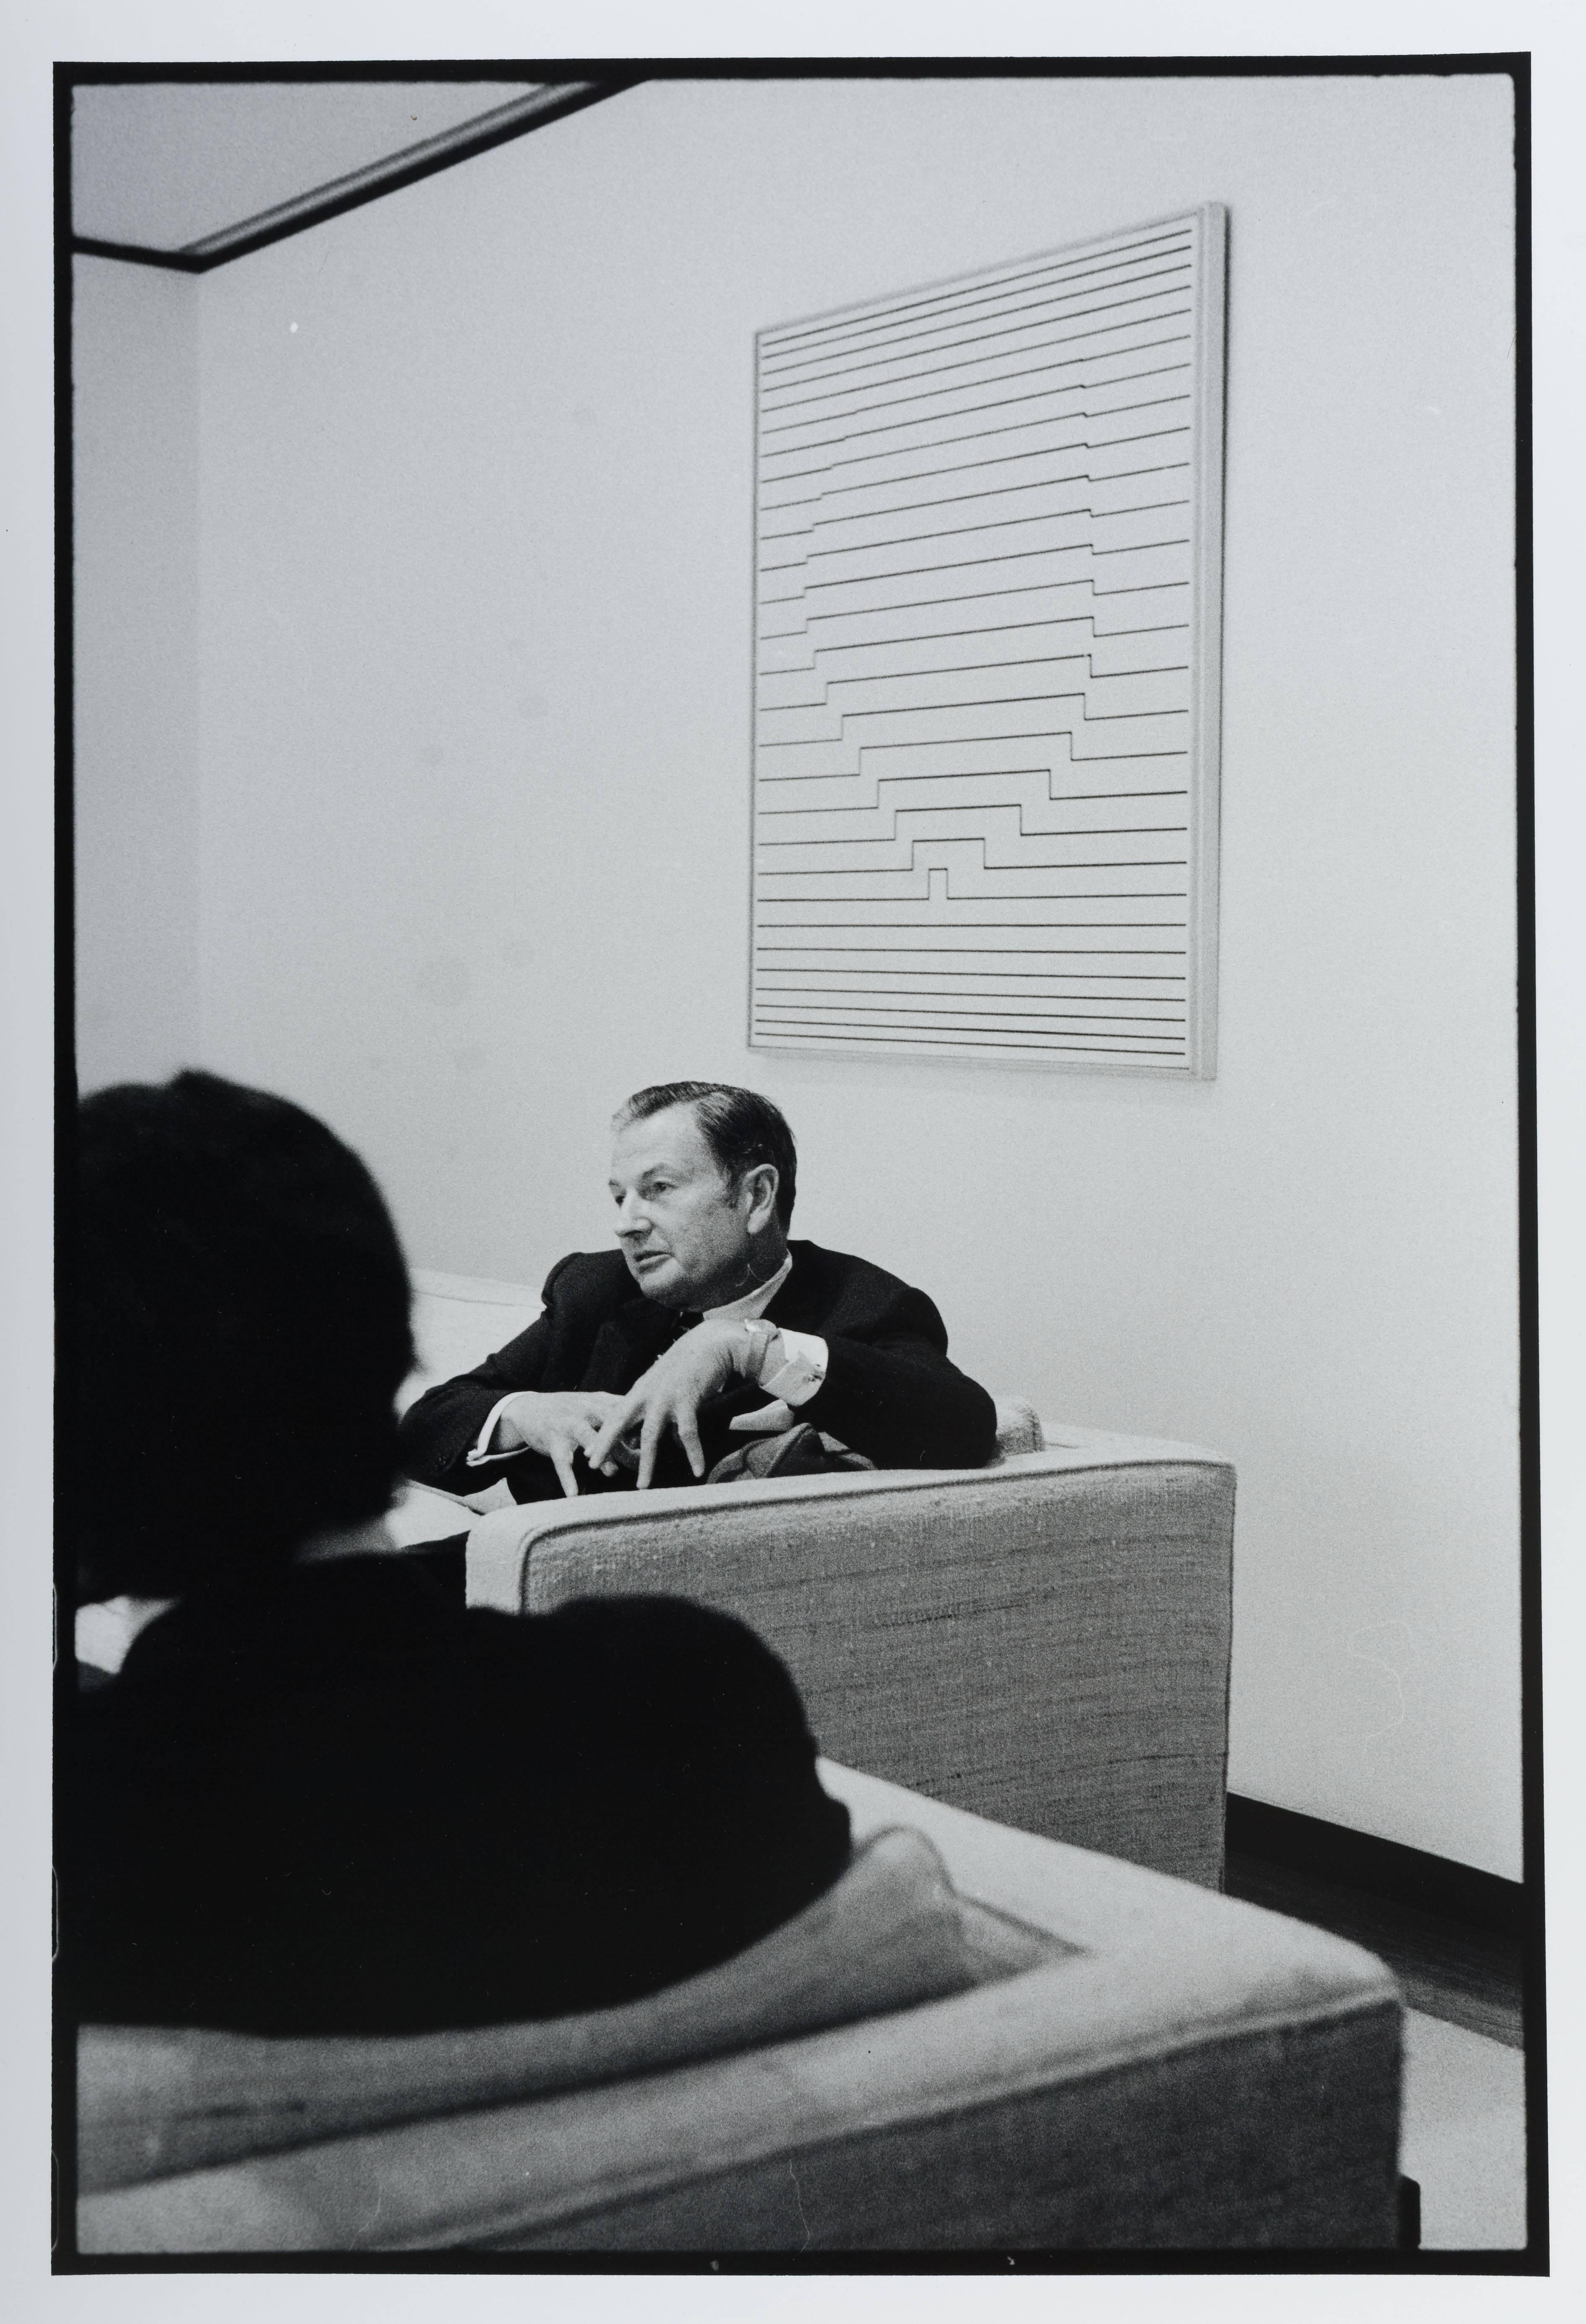 Leonard Freed Black and White Photograph - NYC David Rockefeller